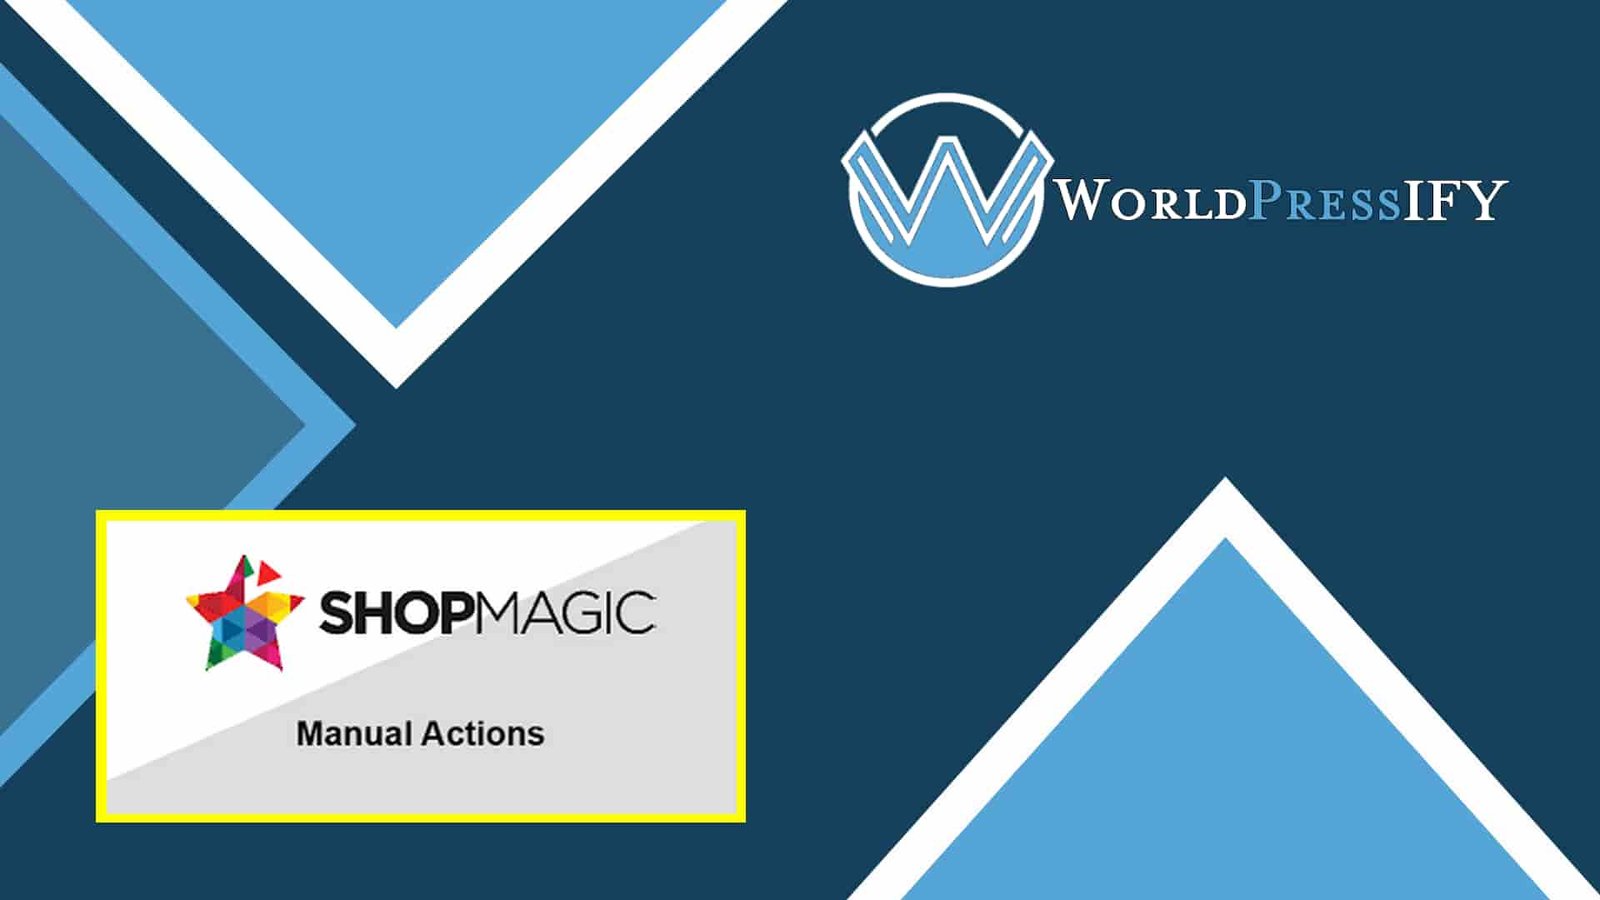 ShopMagic Manual Actions - WorldPress IFY